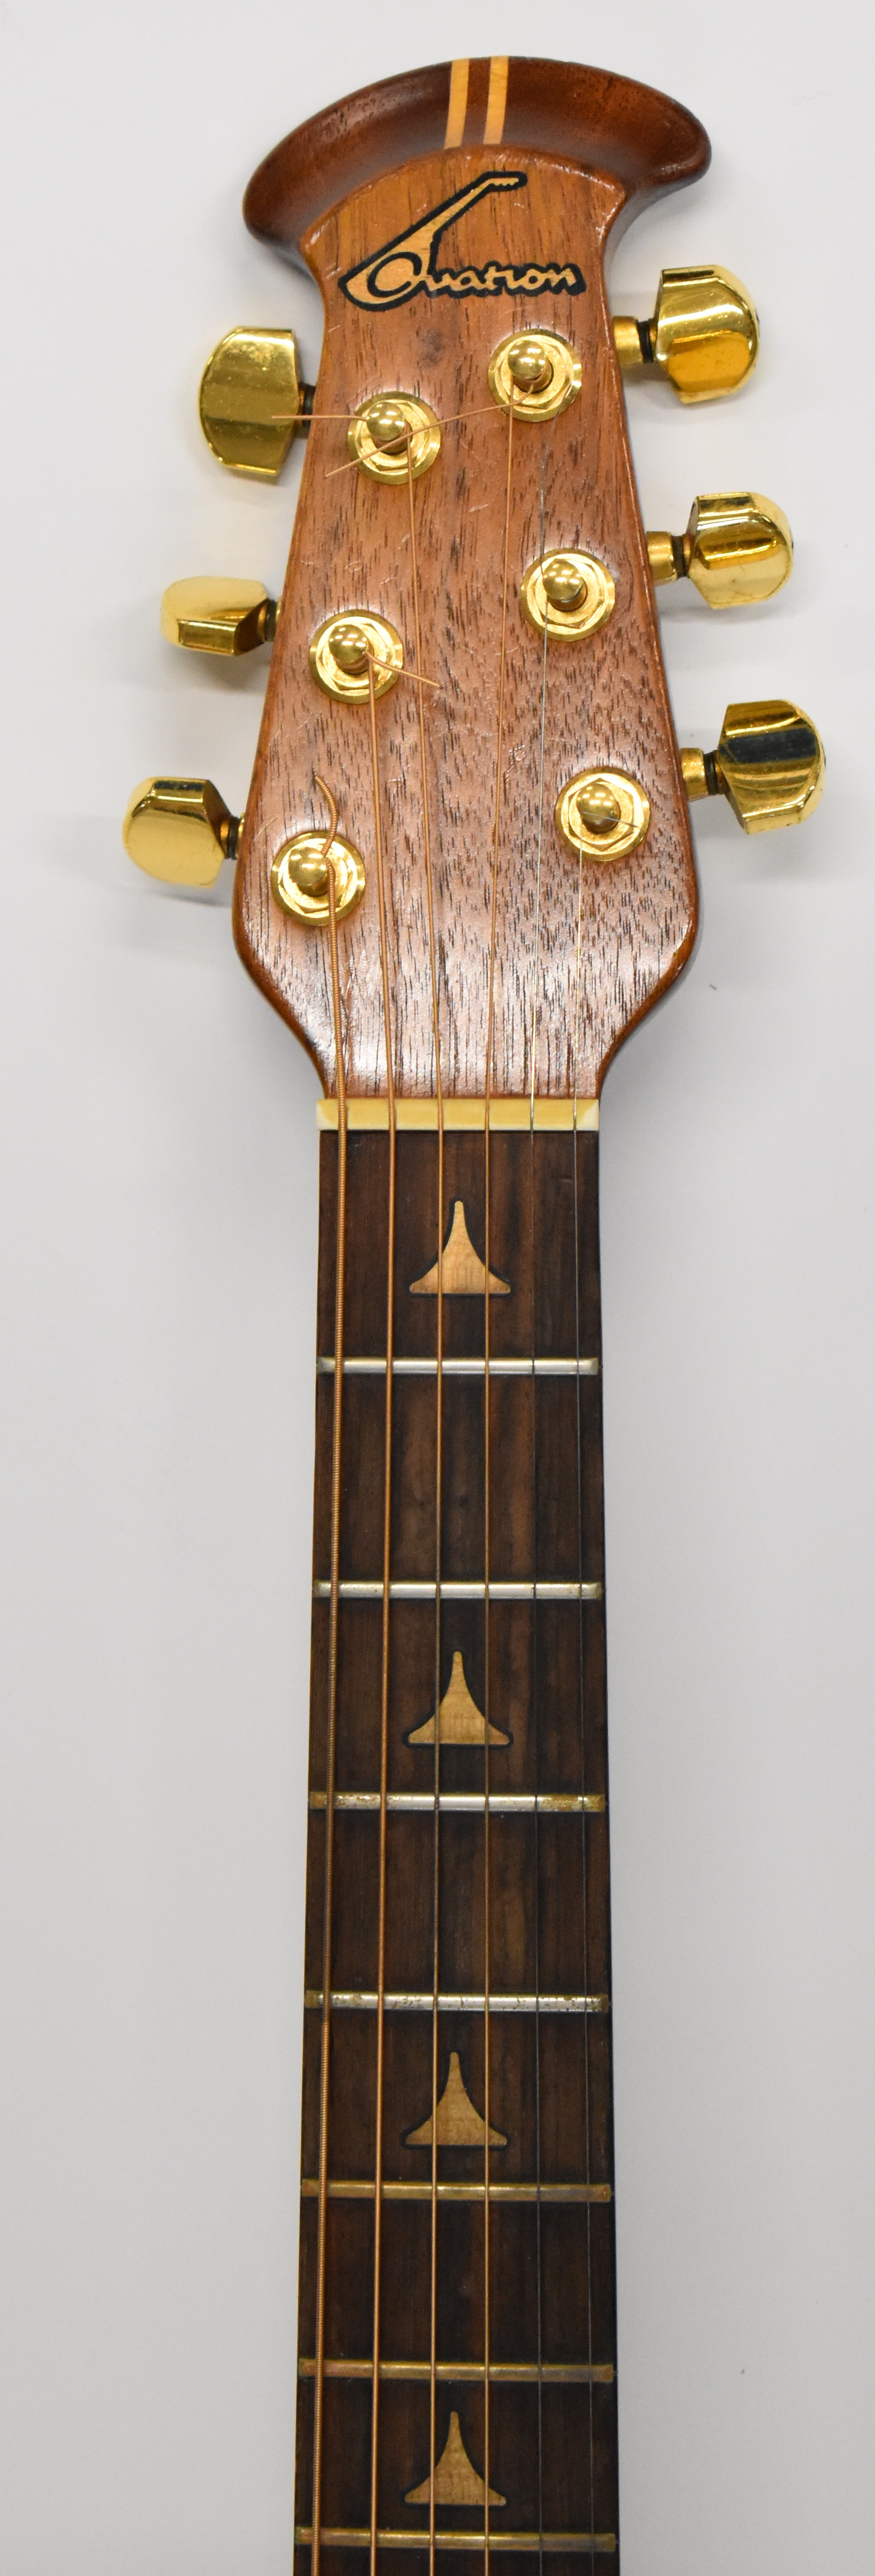 Ovation Elite electro acoustic guitar model number 1868C, with hard case. - Image 3 of 9